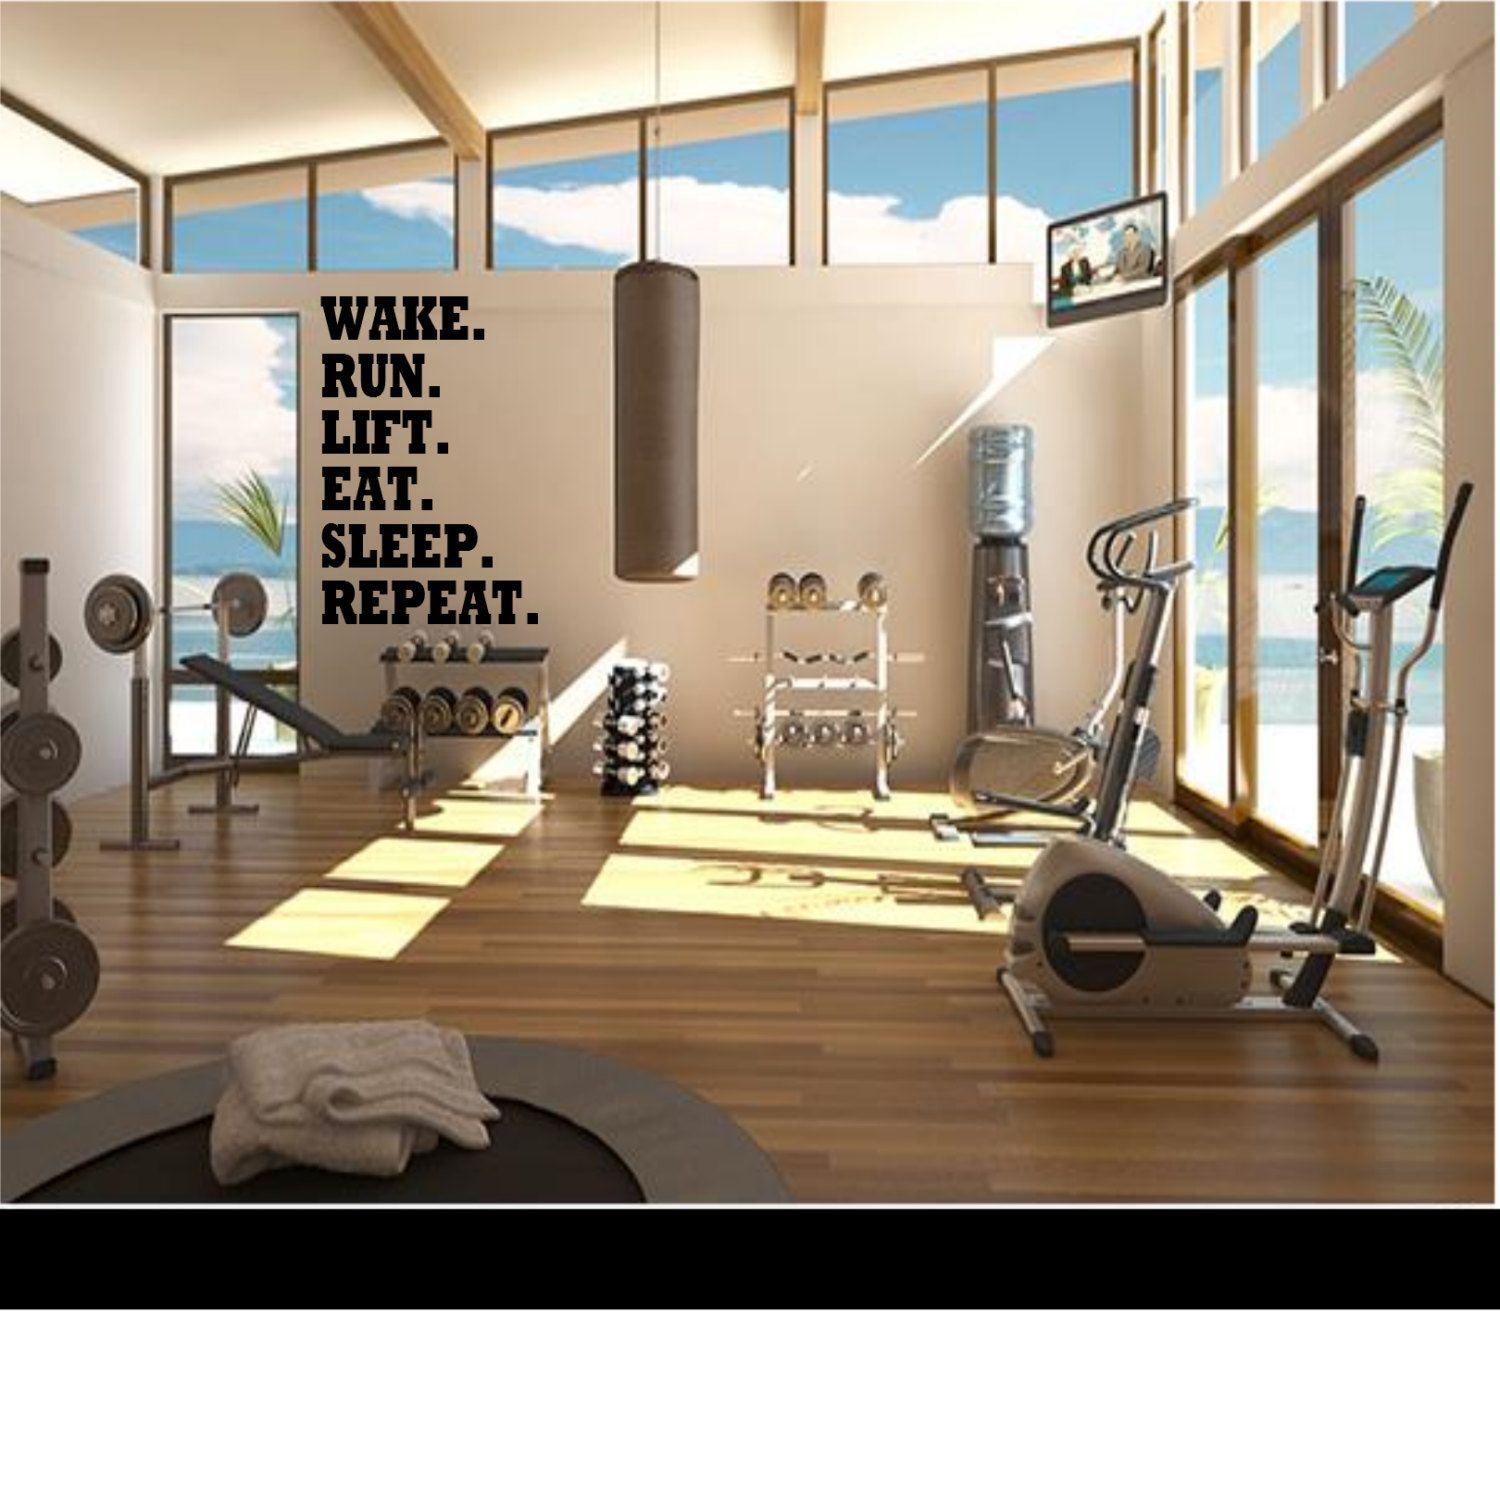 Wake. Run. Eat. Lift. Sleep. Repeat. - Wall Decal -Workout Decal - Gym Decal - Fitness Decal - Wake. Run. Eat. Lift. Sleep. Repeat. - Wall Decal -Workout Decal - Gym Decal - Fitness Decal -   15 private fitness Room ideas